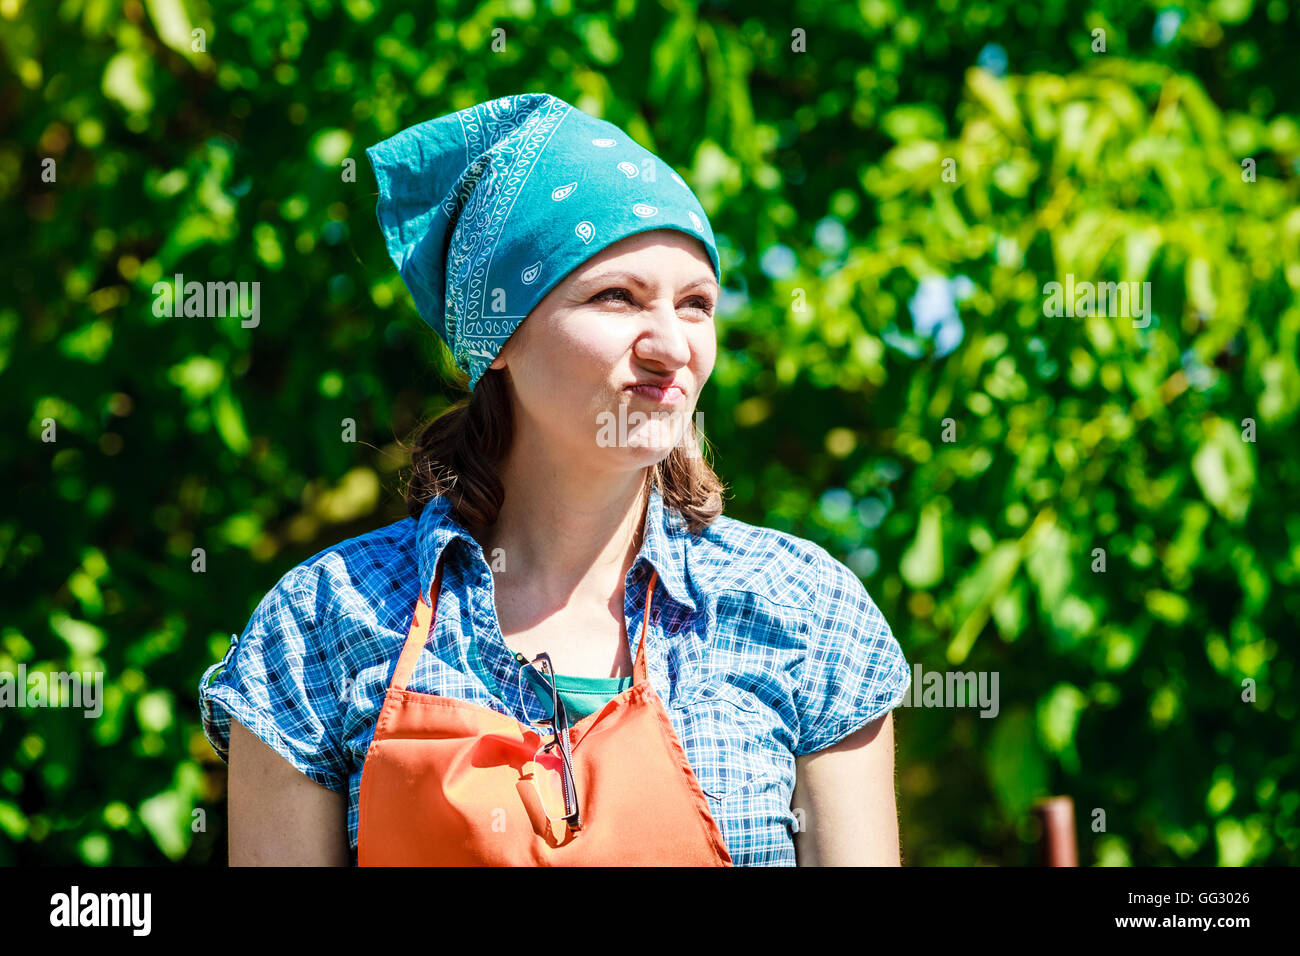 Reife lustige Bäuerin Kopftuch Schürze Hut im Garten Stockfotografie - Alamy